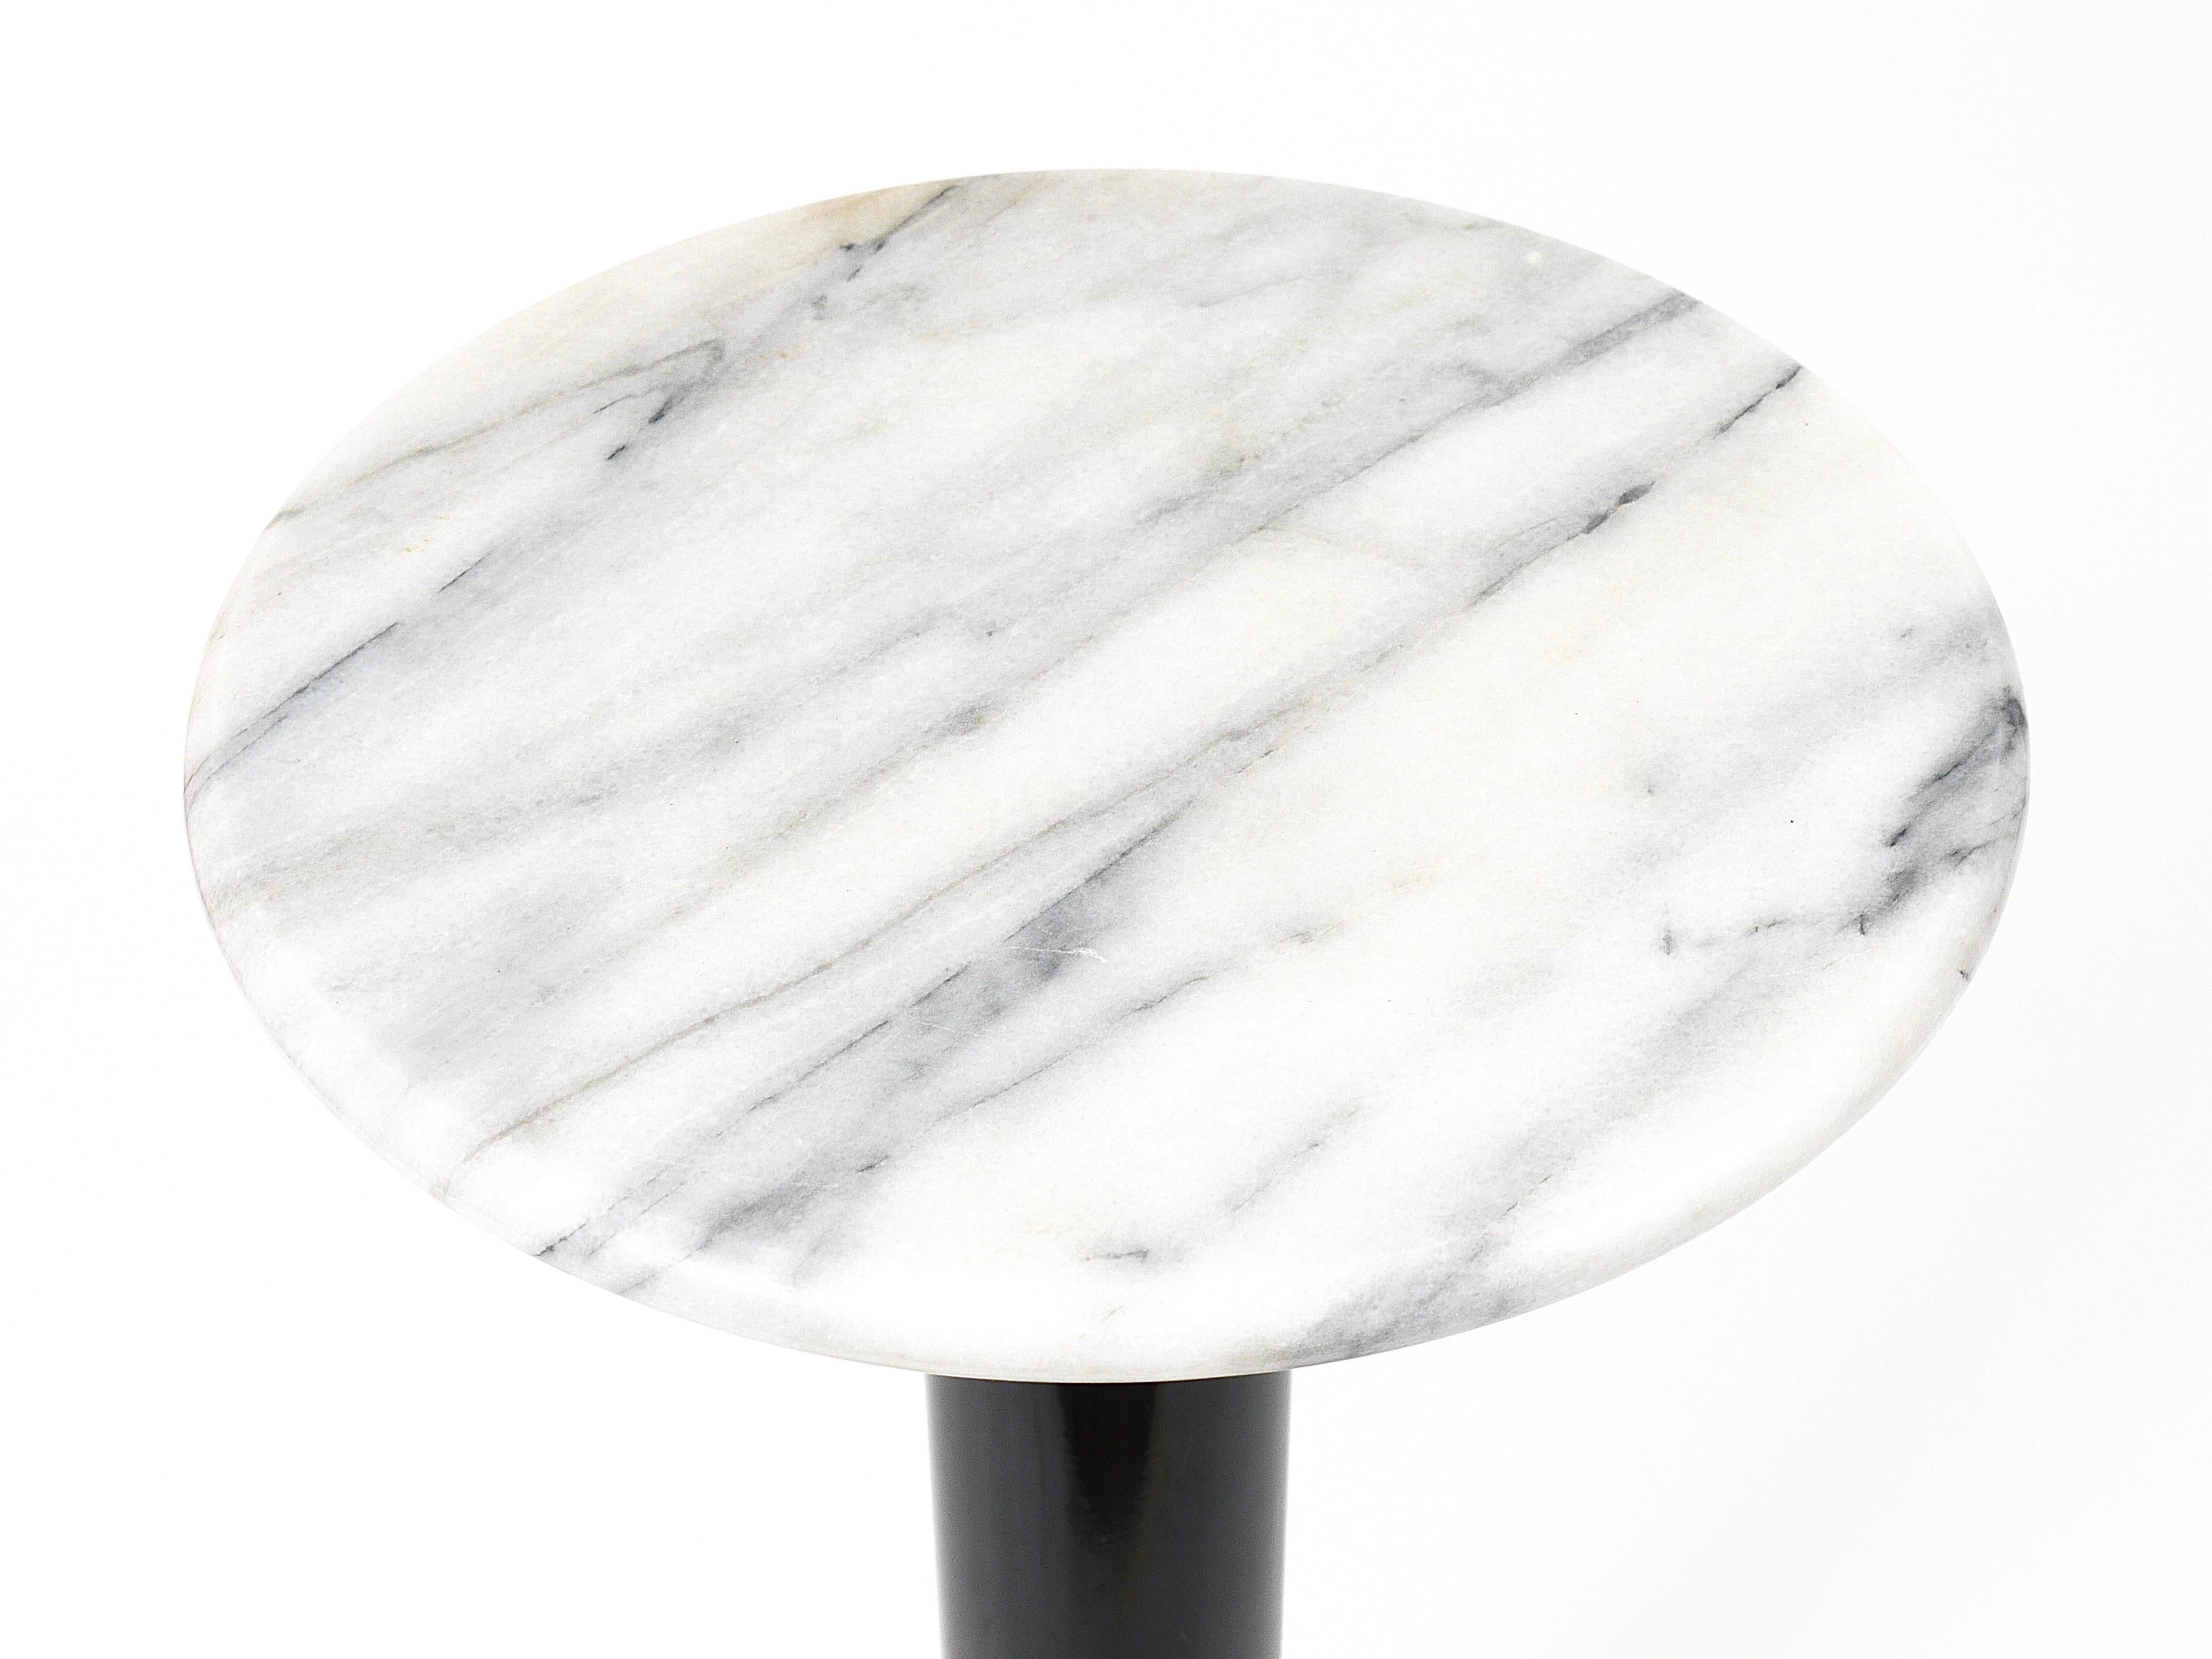 Italian Postmodern White Carrara Marble Flower Stand Pedestal Table, Italy, 1980s For Sale